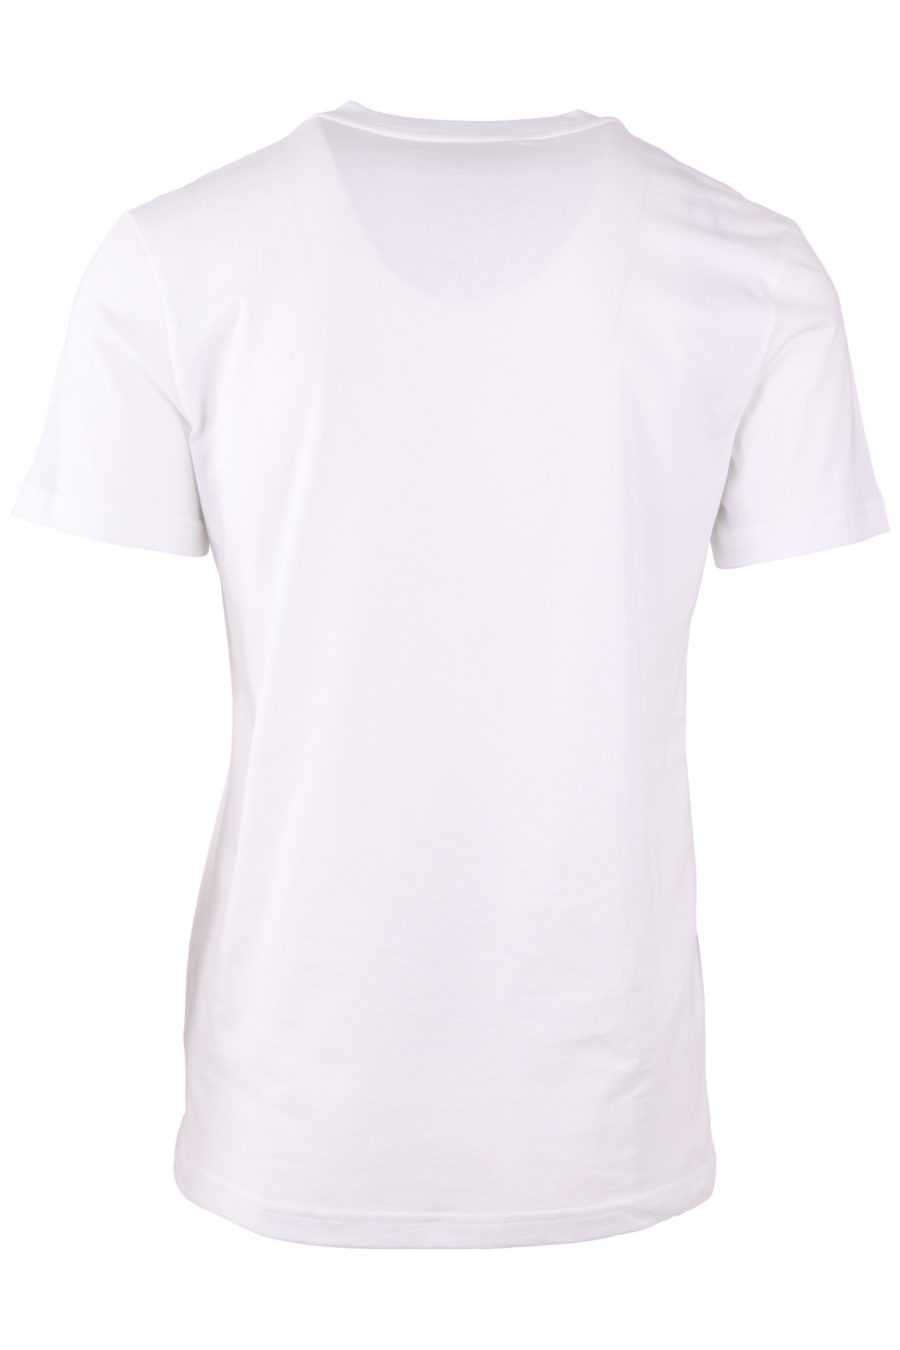 Moschino Couture T-shirt blanc avec logo noir sur le devant - 6e37436b62b71f0f53f23acc2fcd64db50b226fb